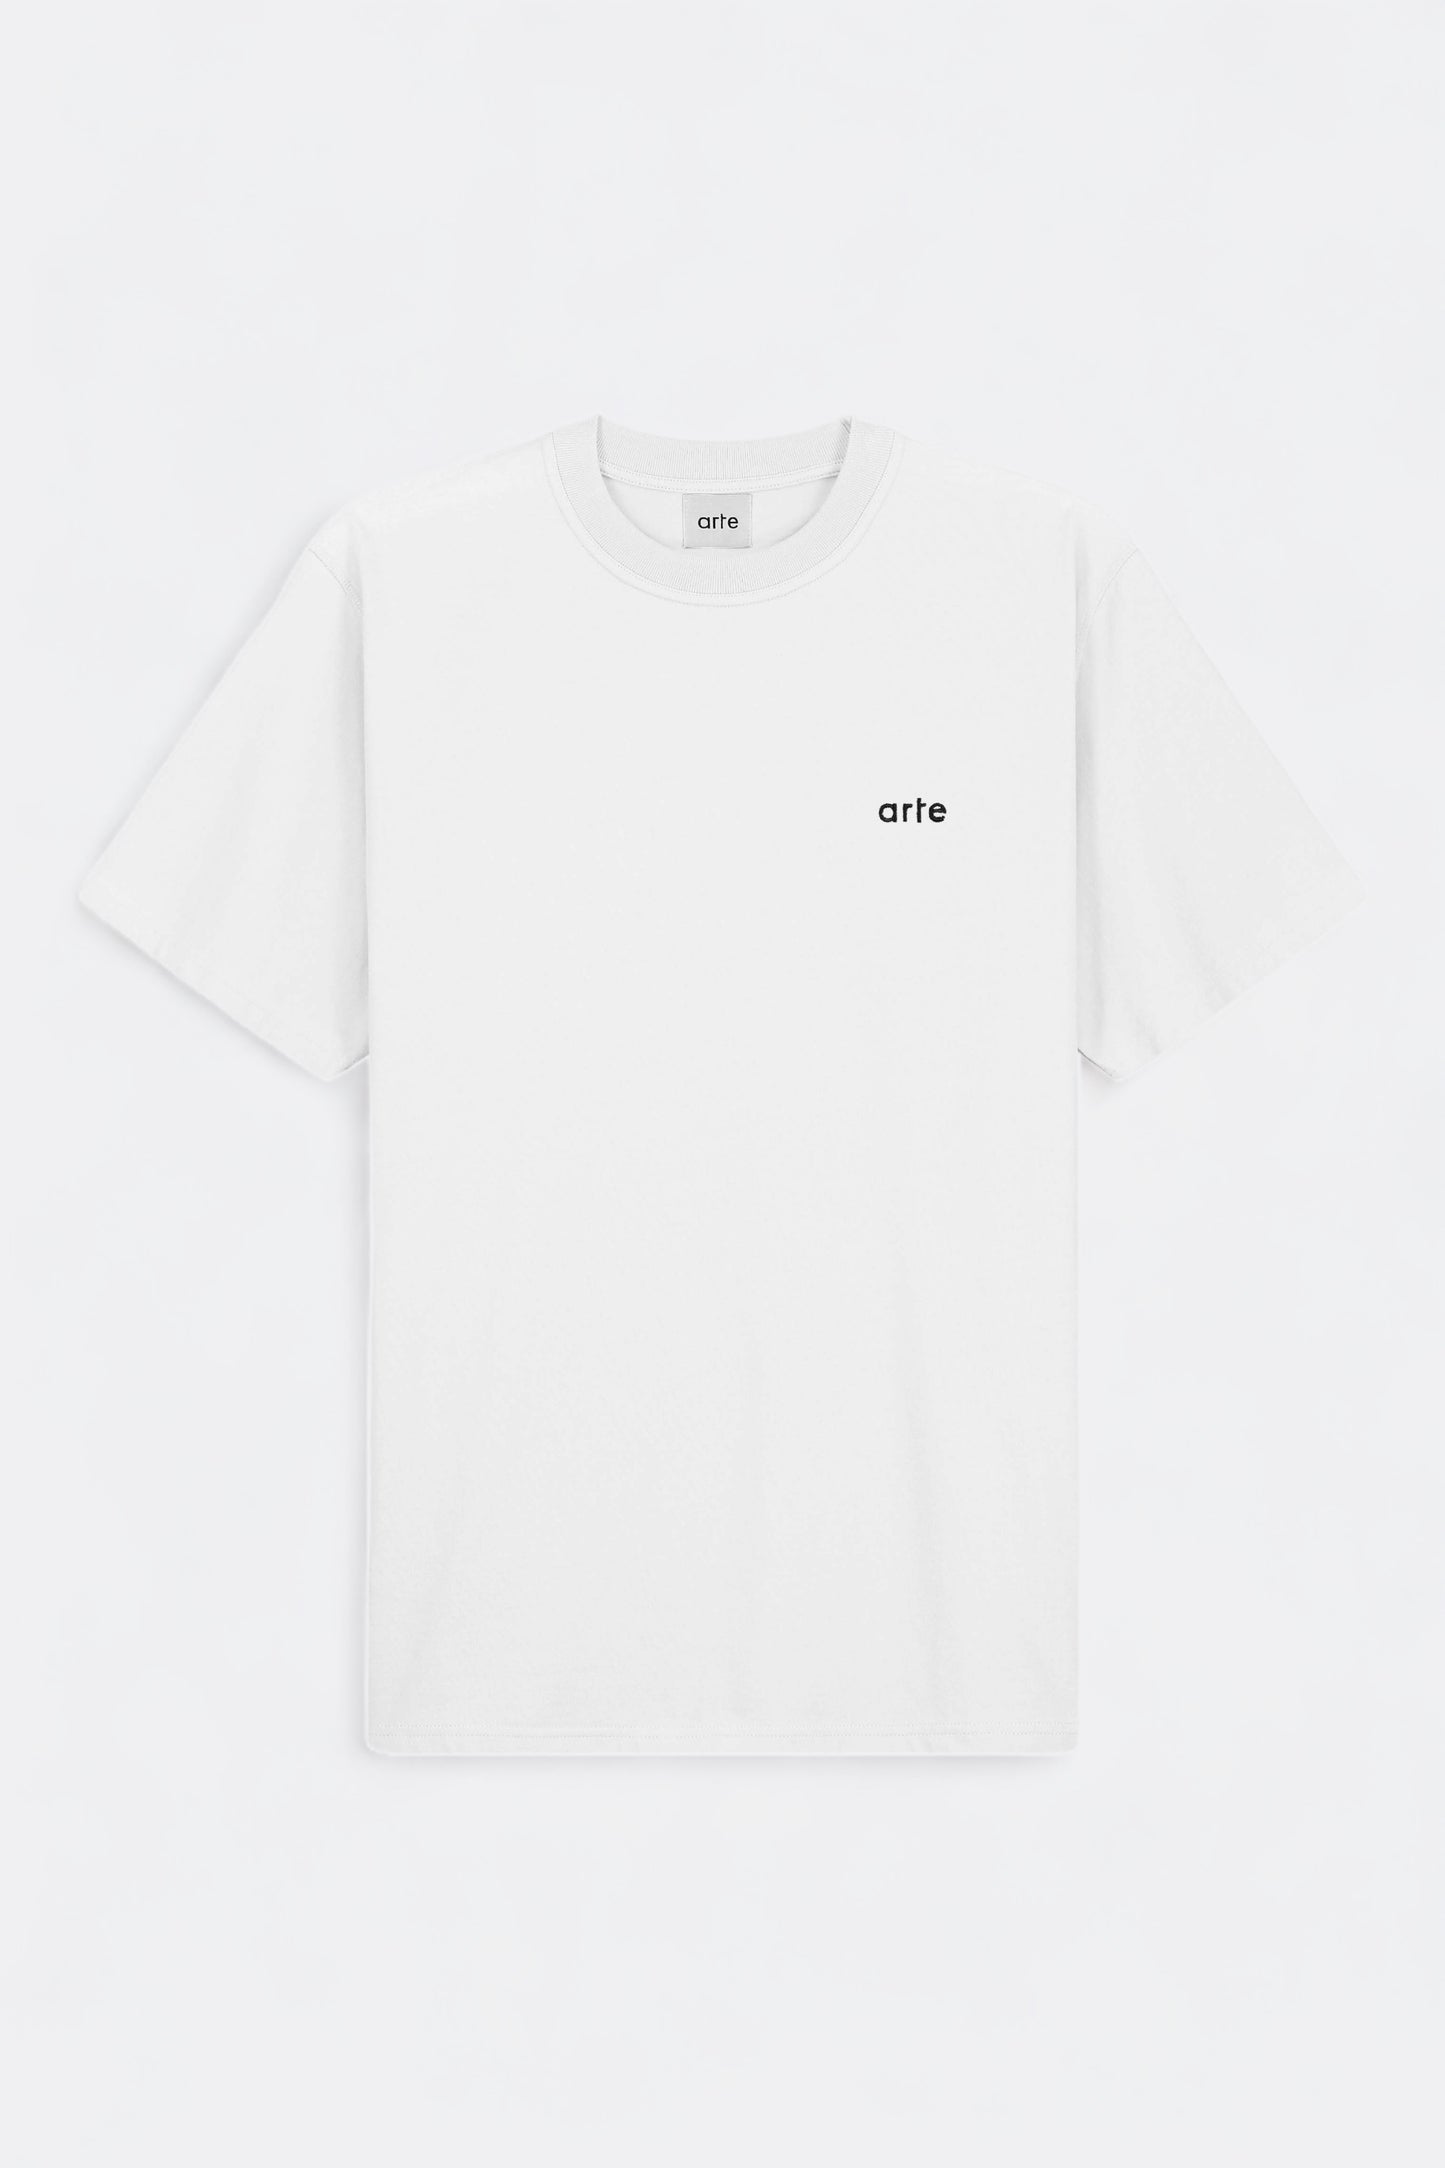 Arte - Teo Back Hearts T-shirt (White)